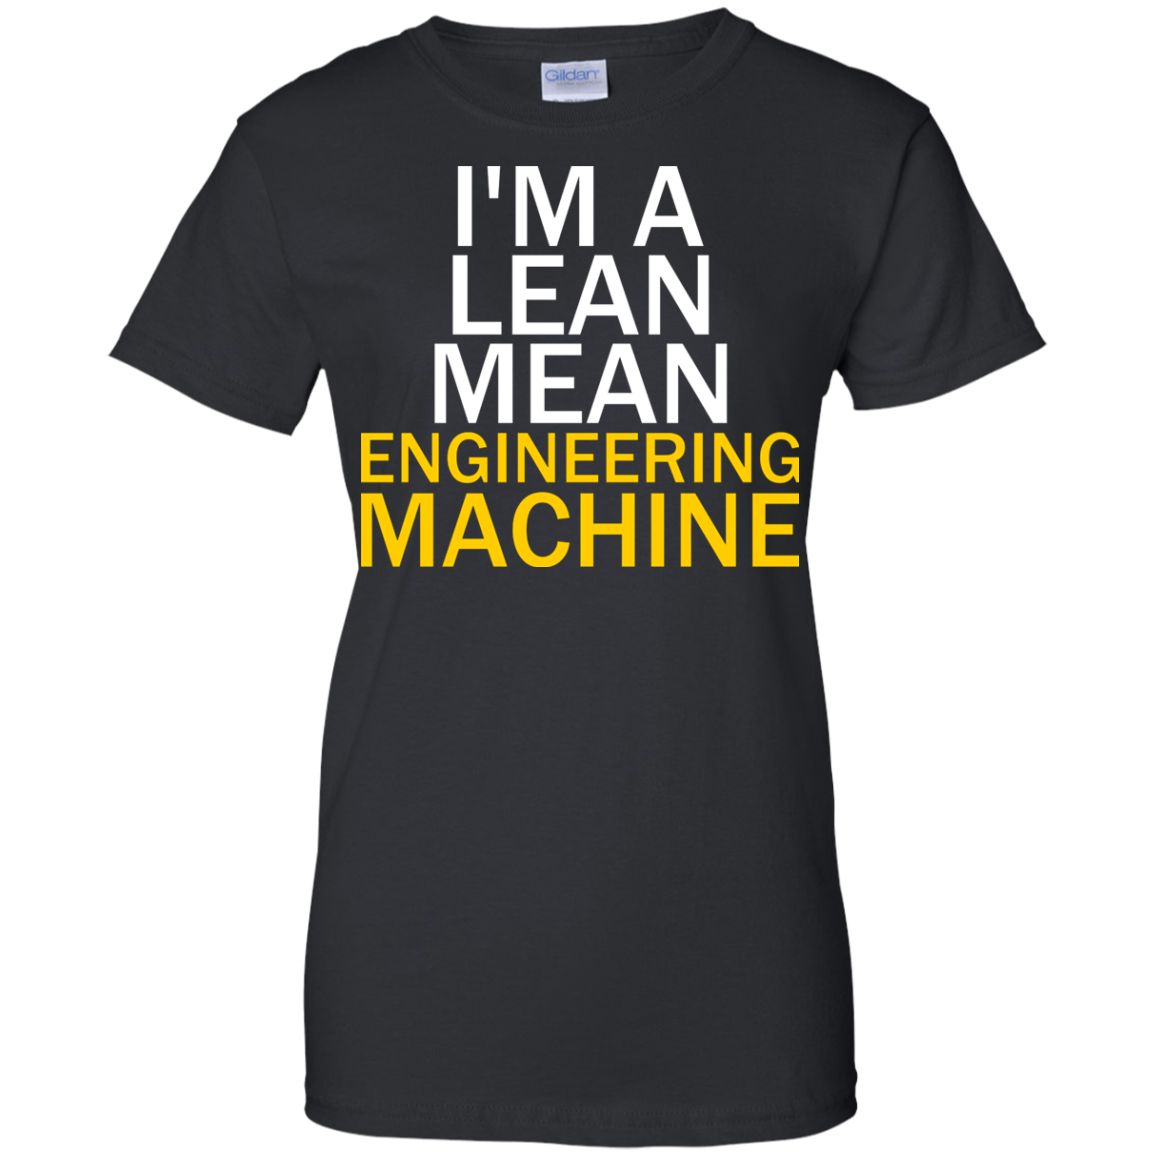 I'm A Lean, Mean, Engineering Machine